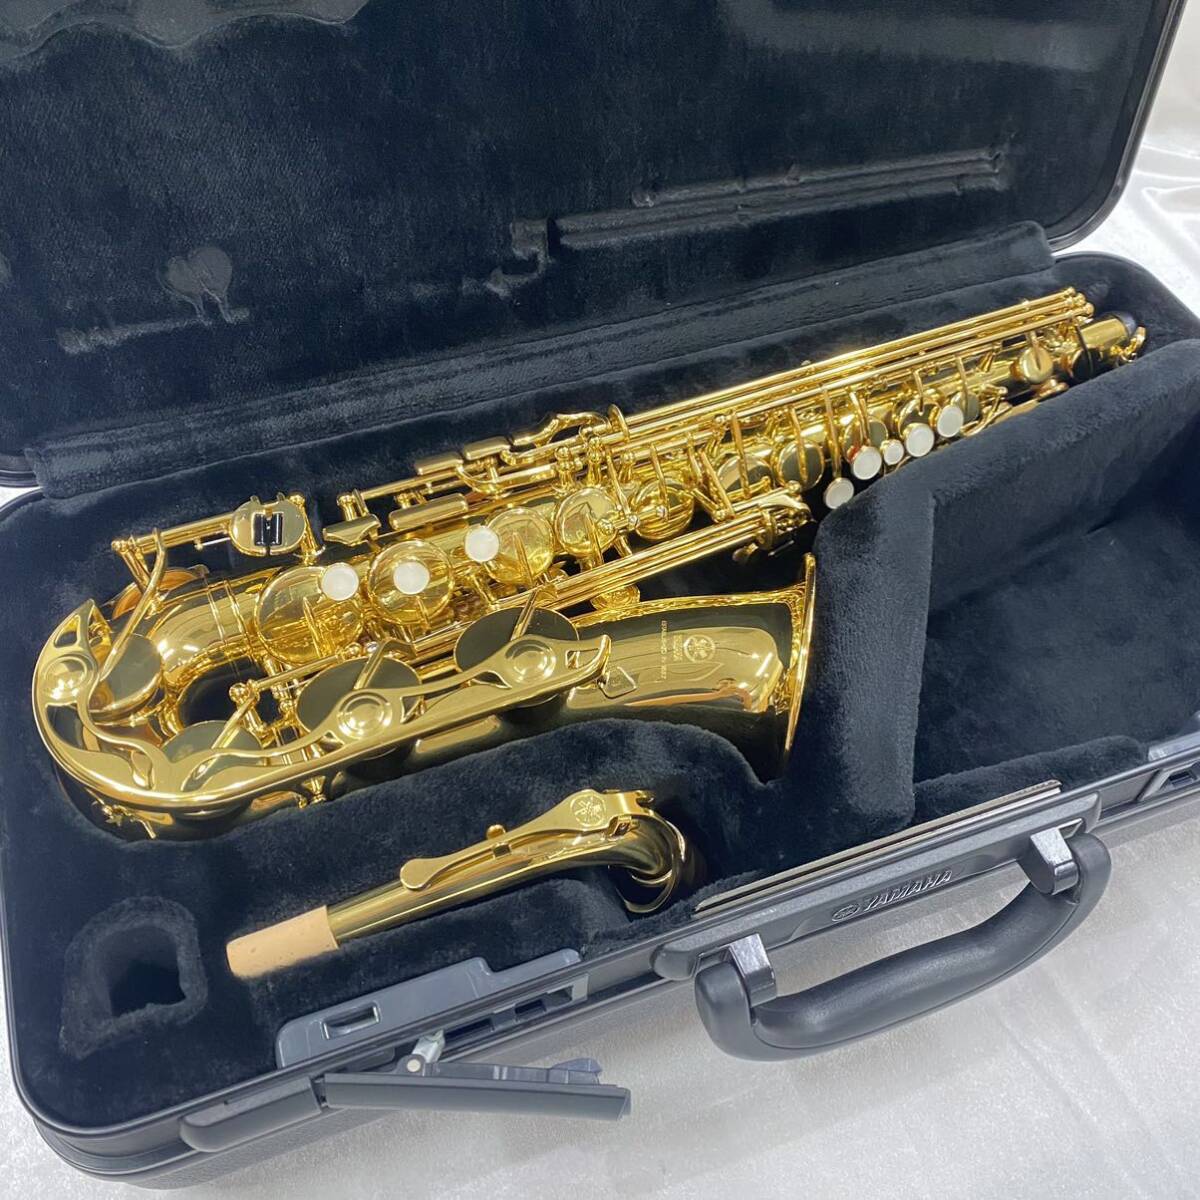  Yamaha YAMAHA alto saxophone YAS-275.